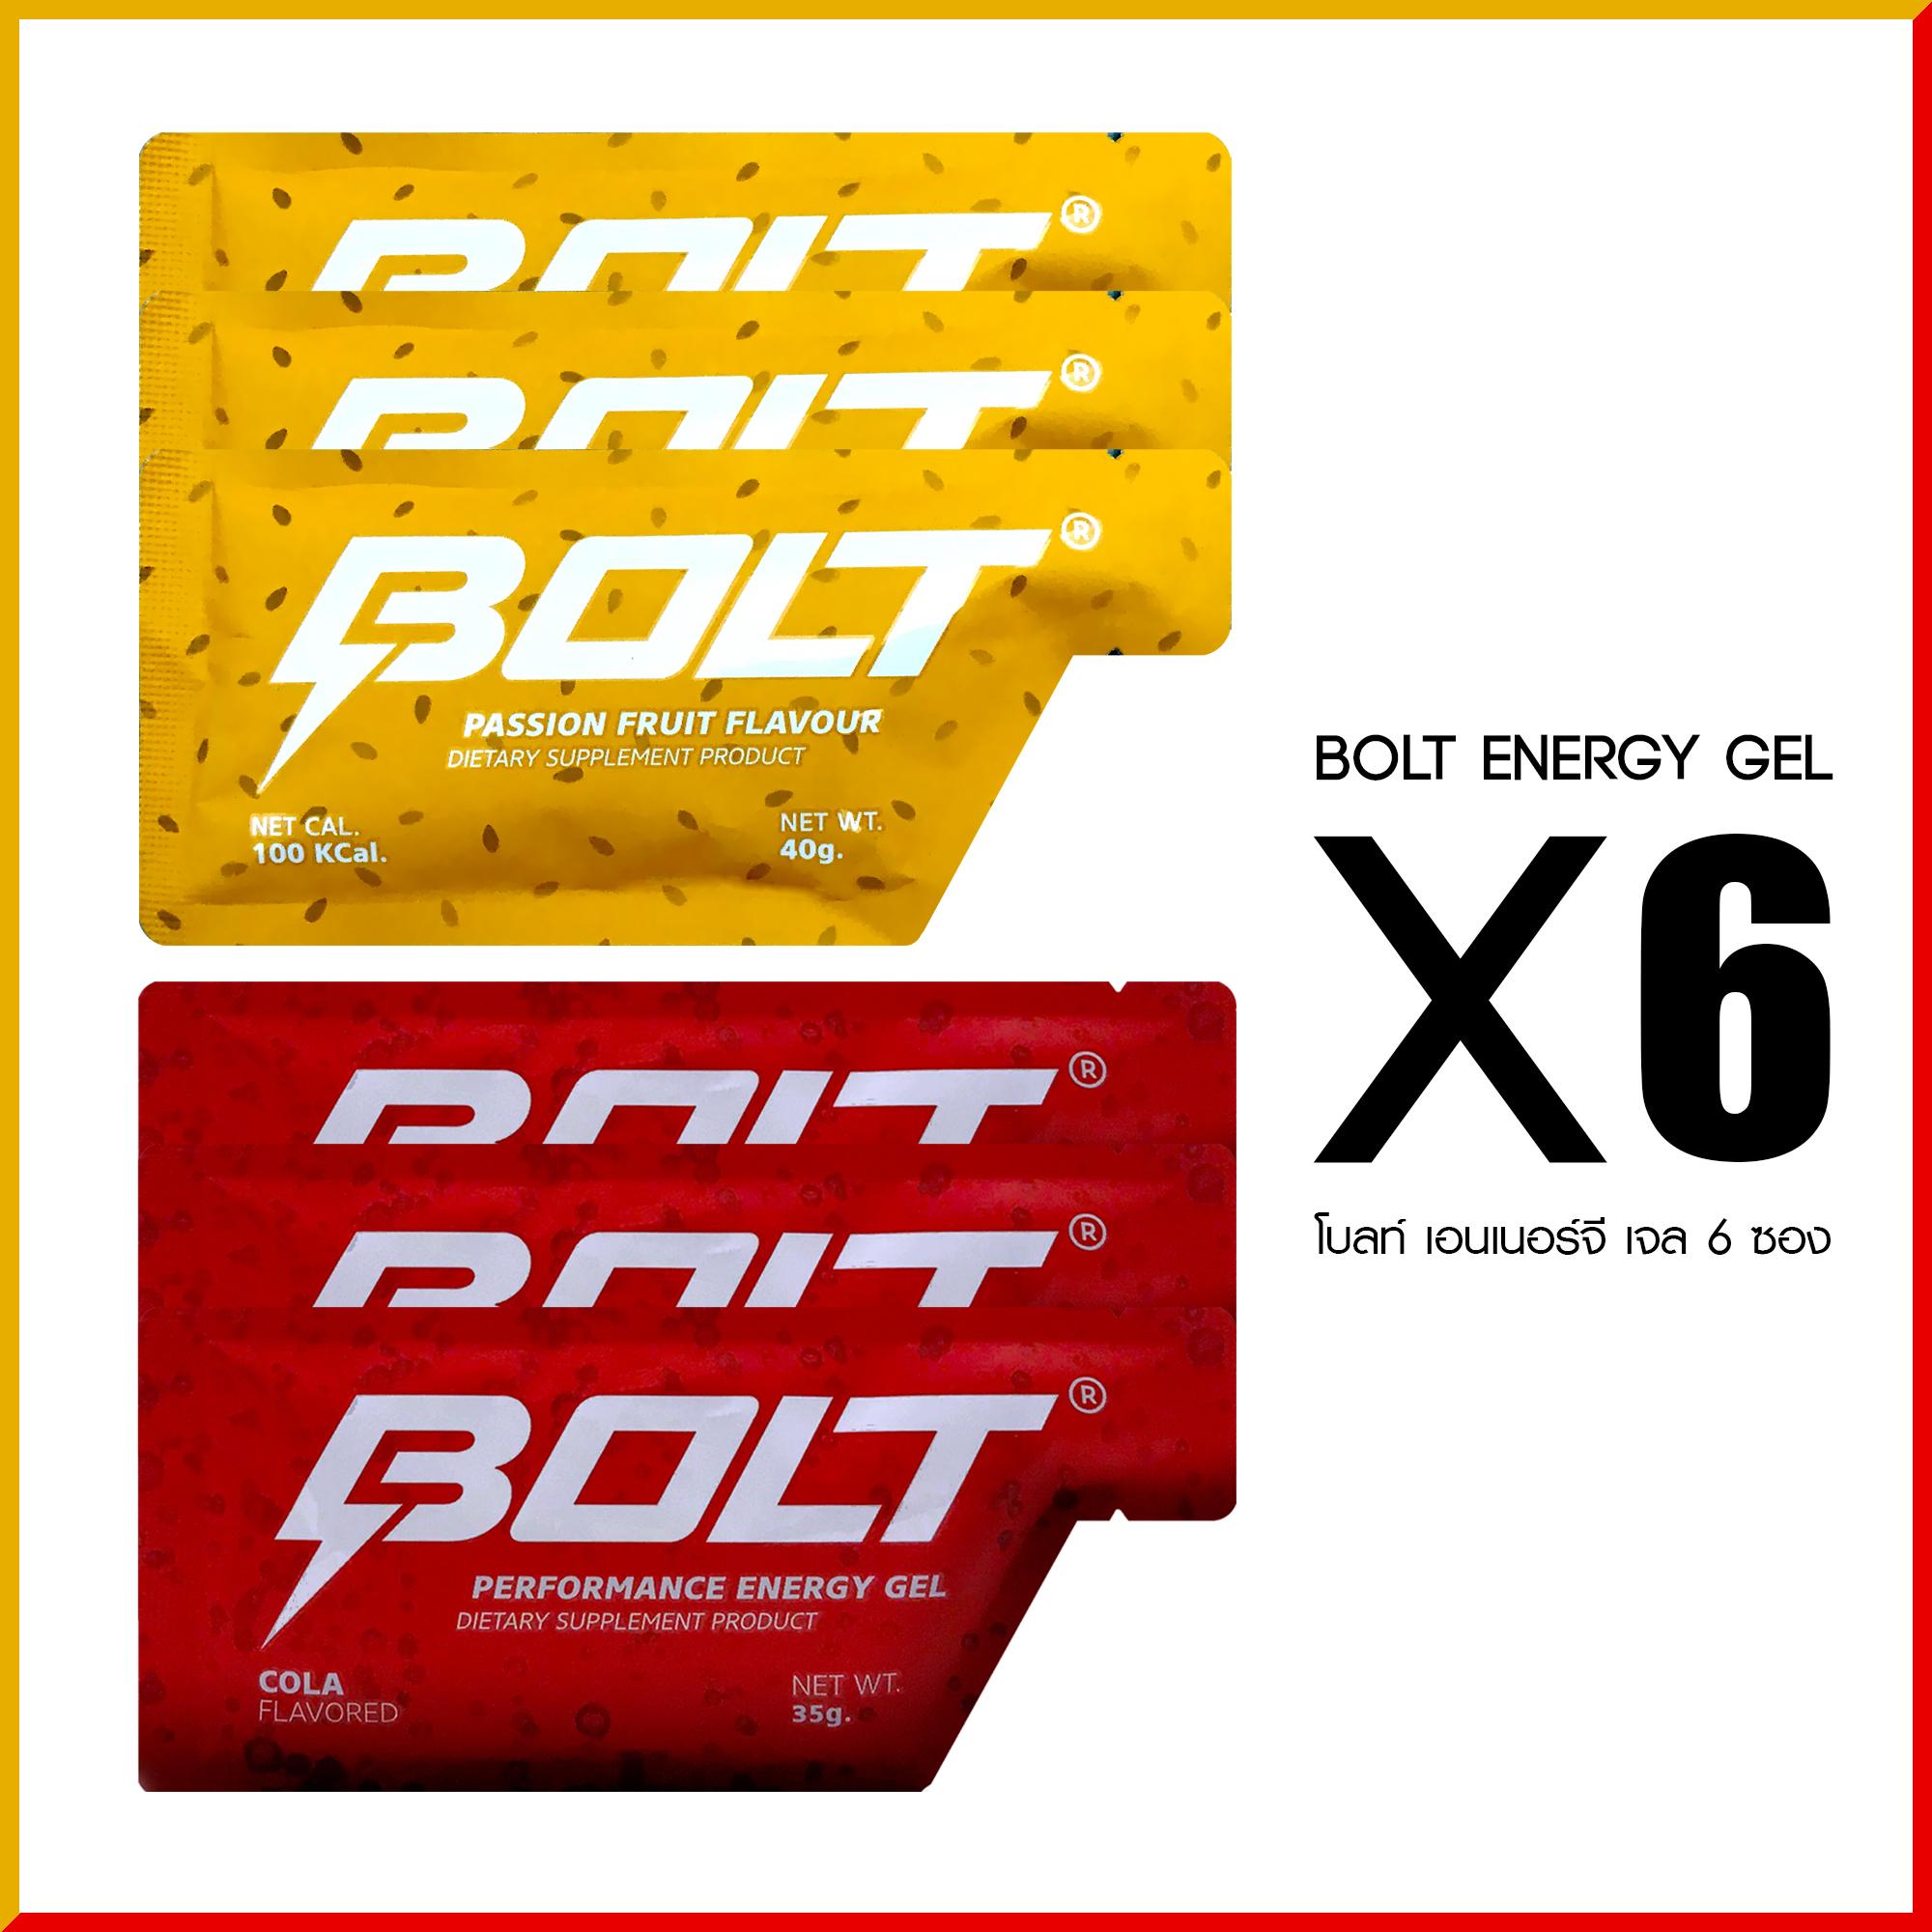 Bolt Energy Gel Cola&Passion fruit (Mix flavors set of 6 envelopes) NET WT. 35,40g. เจลให้พลังงานโบลท์ รสโคล่า&เสาวรส (คละรส 6 ซอง) ขนาด 35,40 กรัม